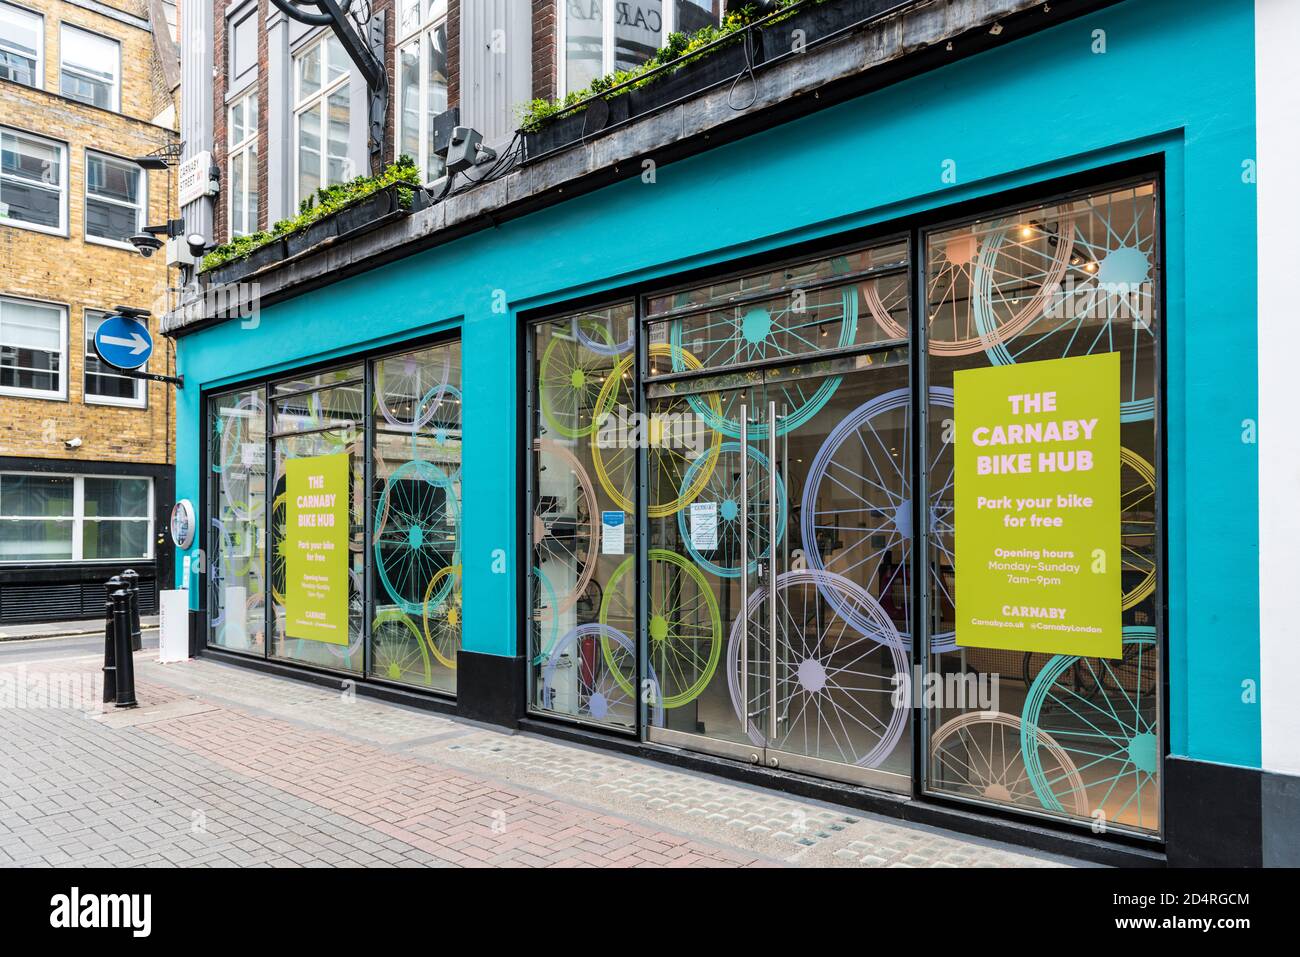 Bike hub, Carnaby street, London Stock Photo